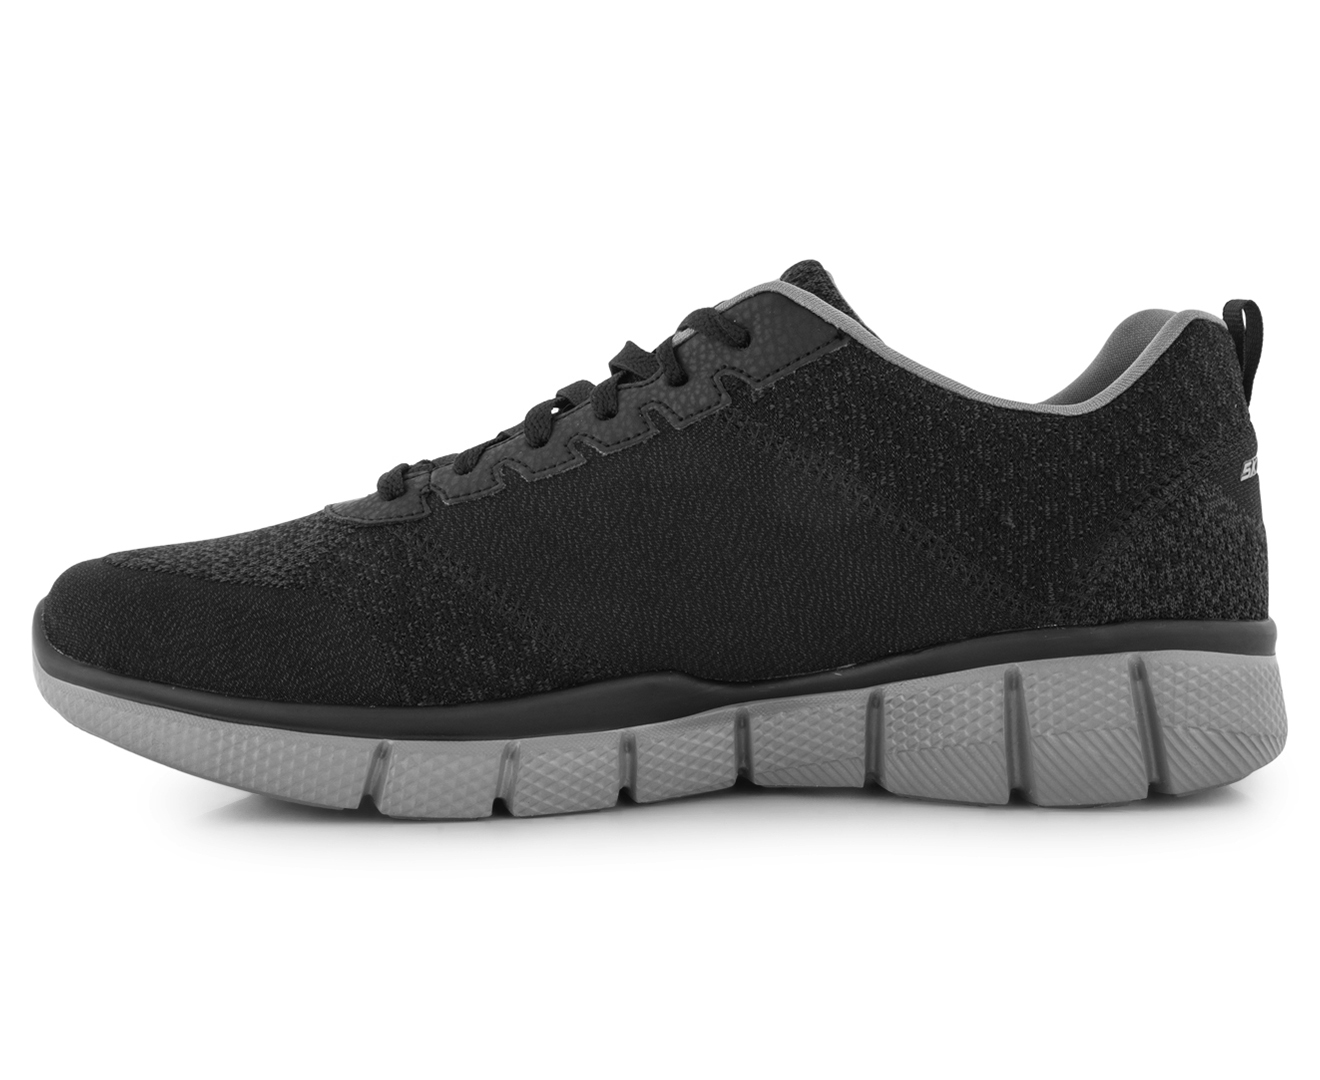 Skechers Men's Equalizer 2.0 True Balance Shoe - Black/Charcoal ...